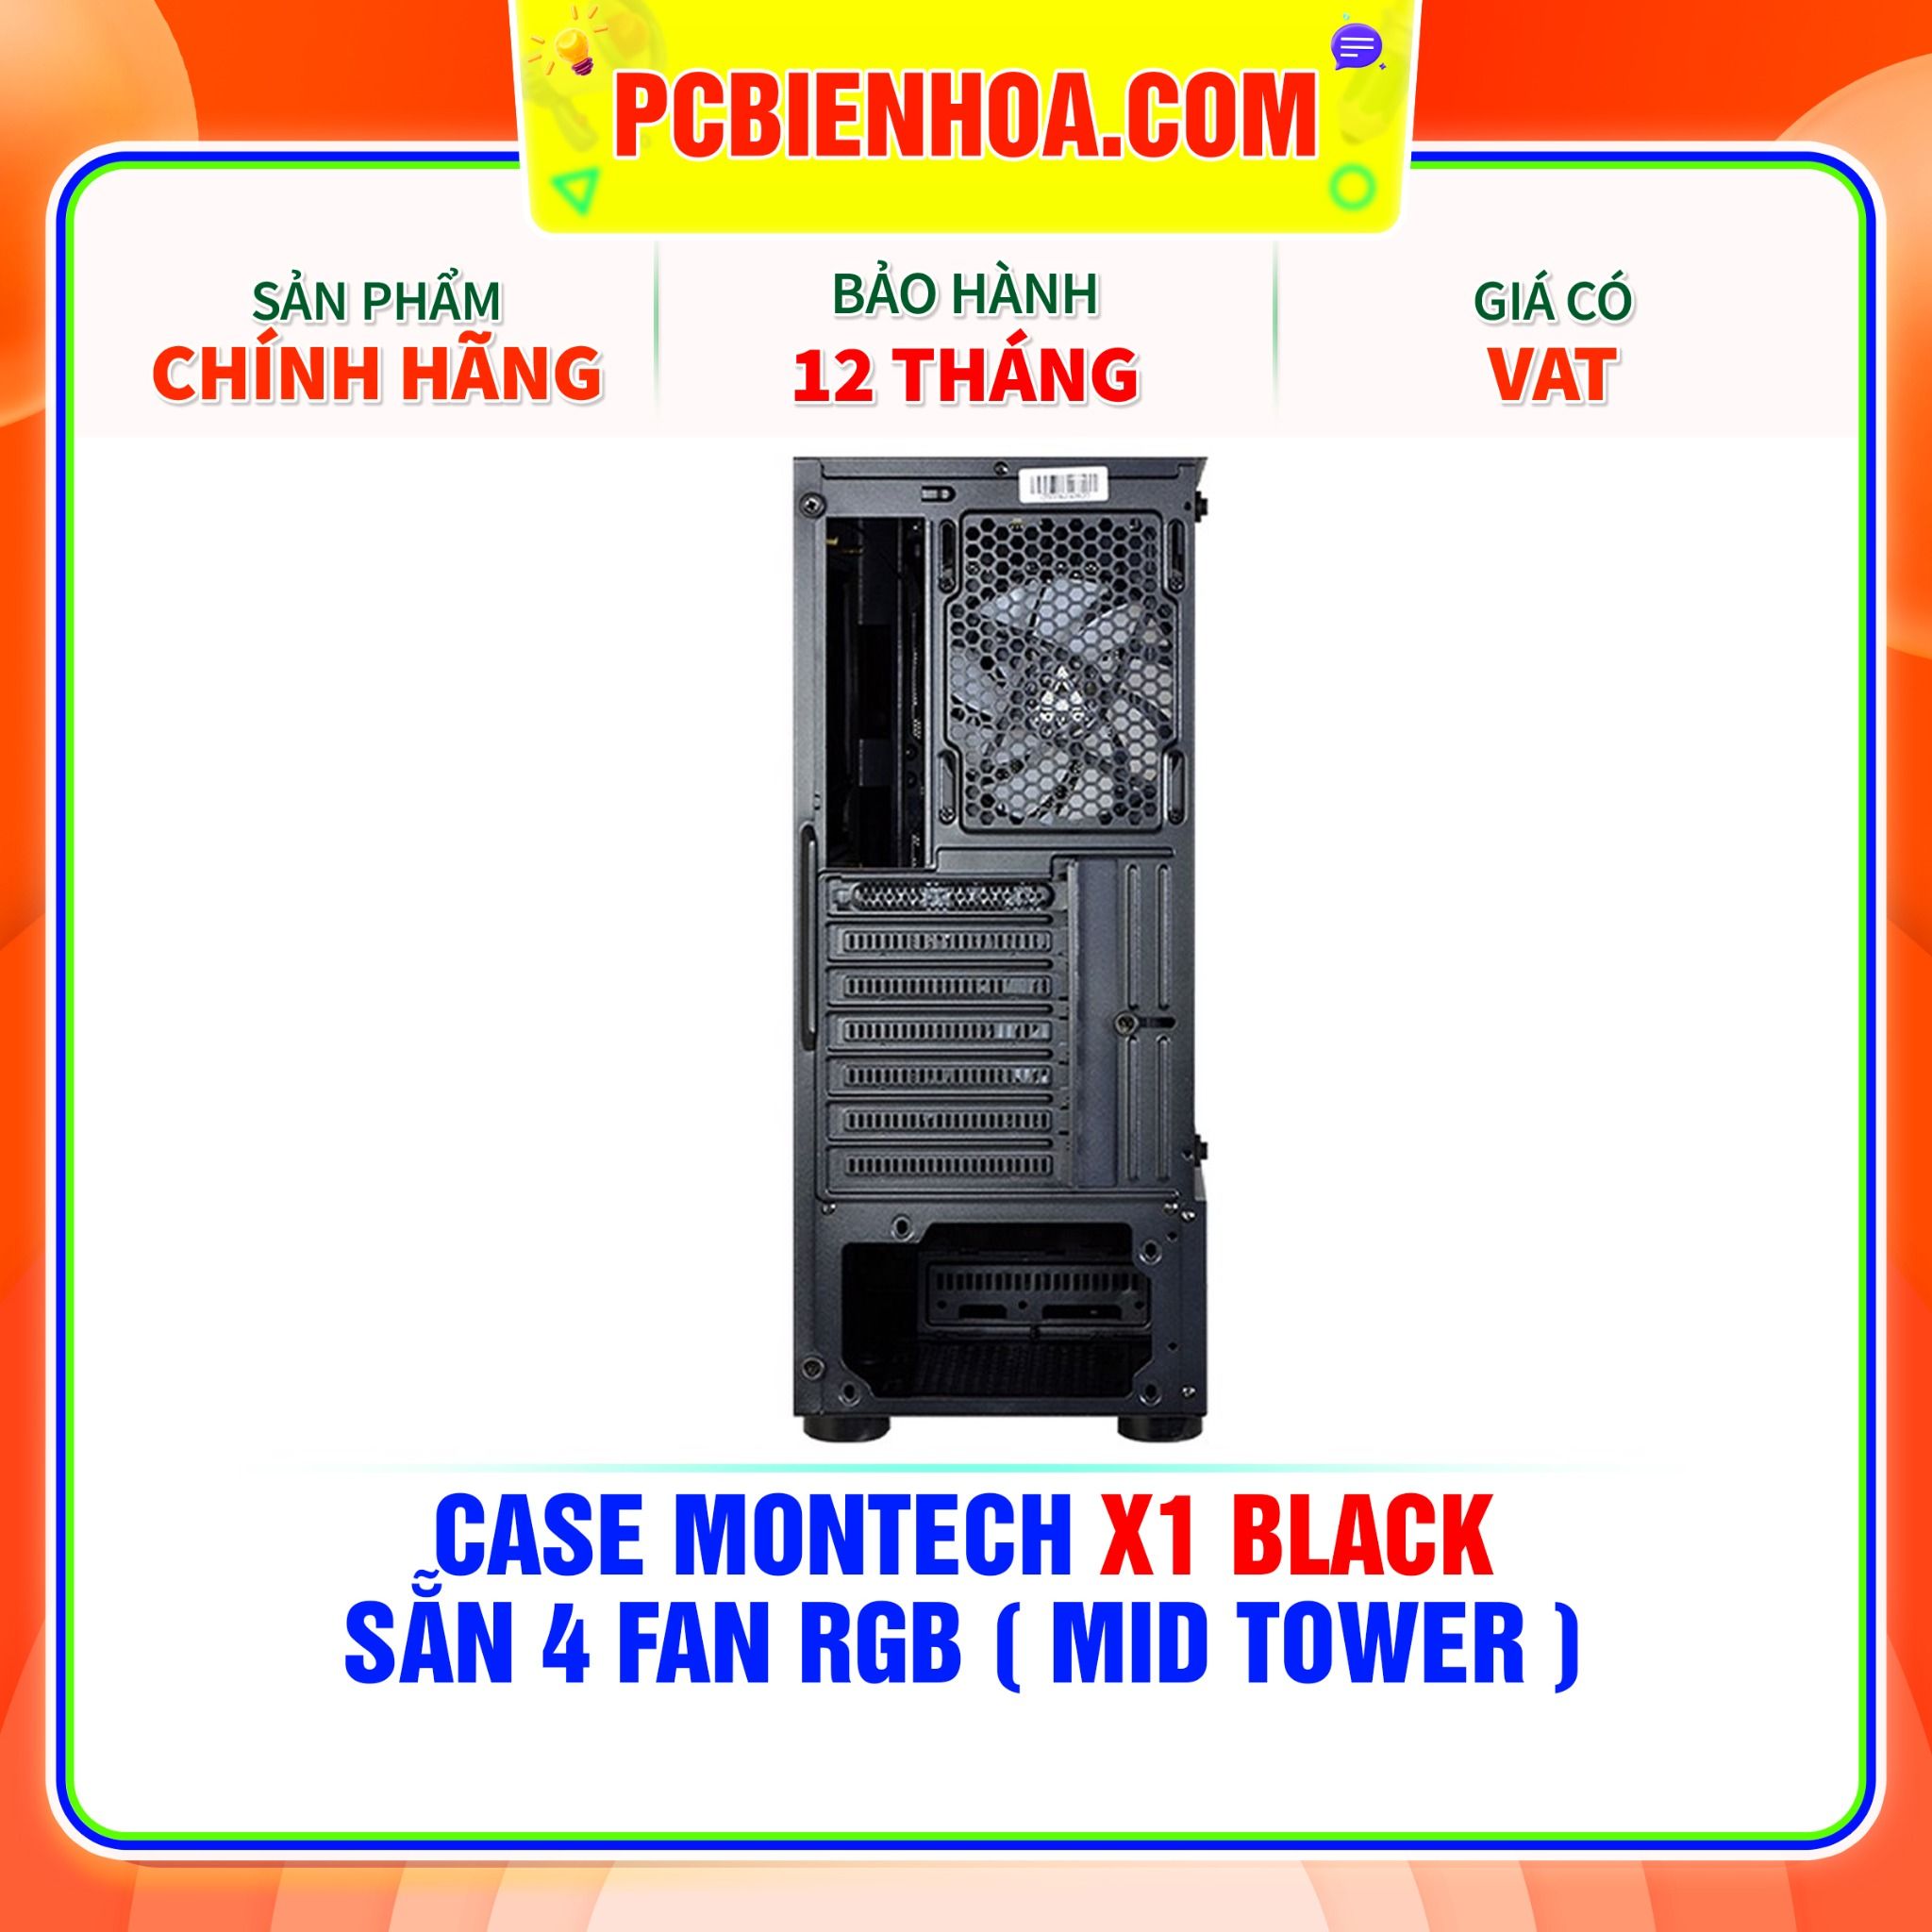  CASE MONTECH X1 BLACK - SẴN 4 FAN RGB ( MID TOWER ) 